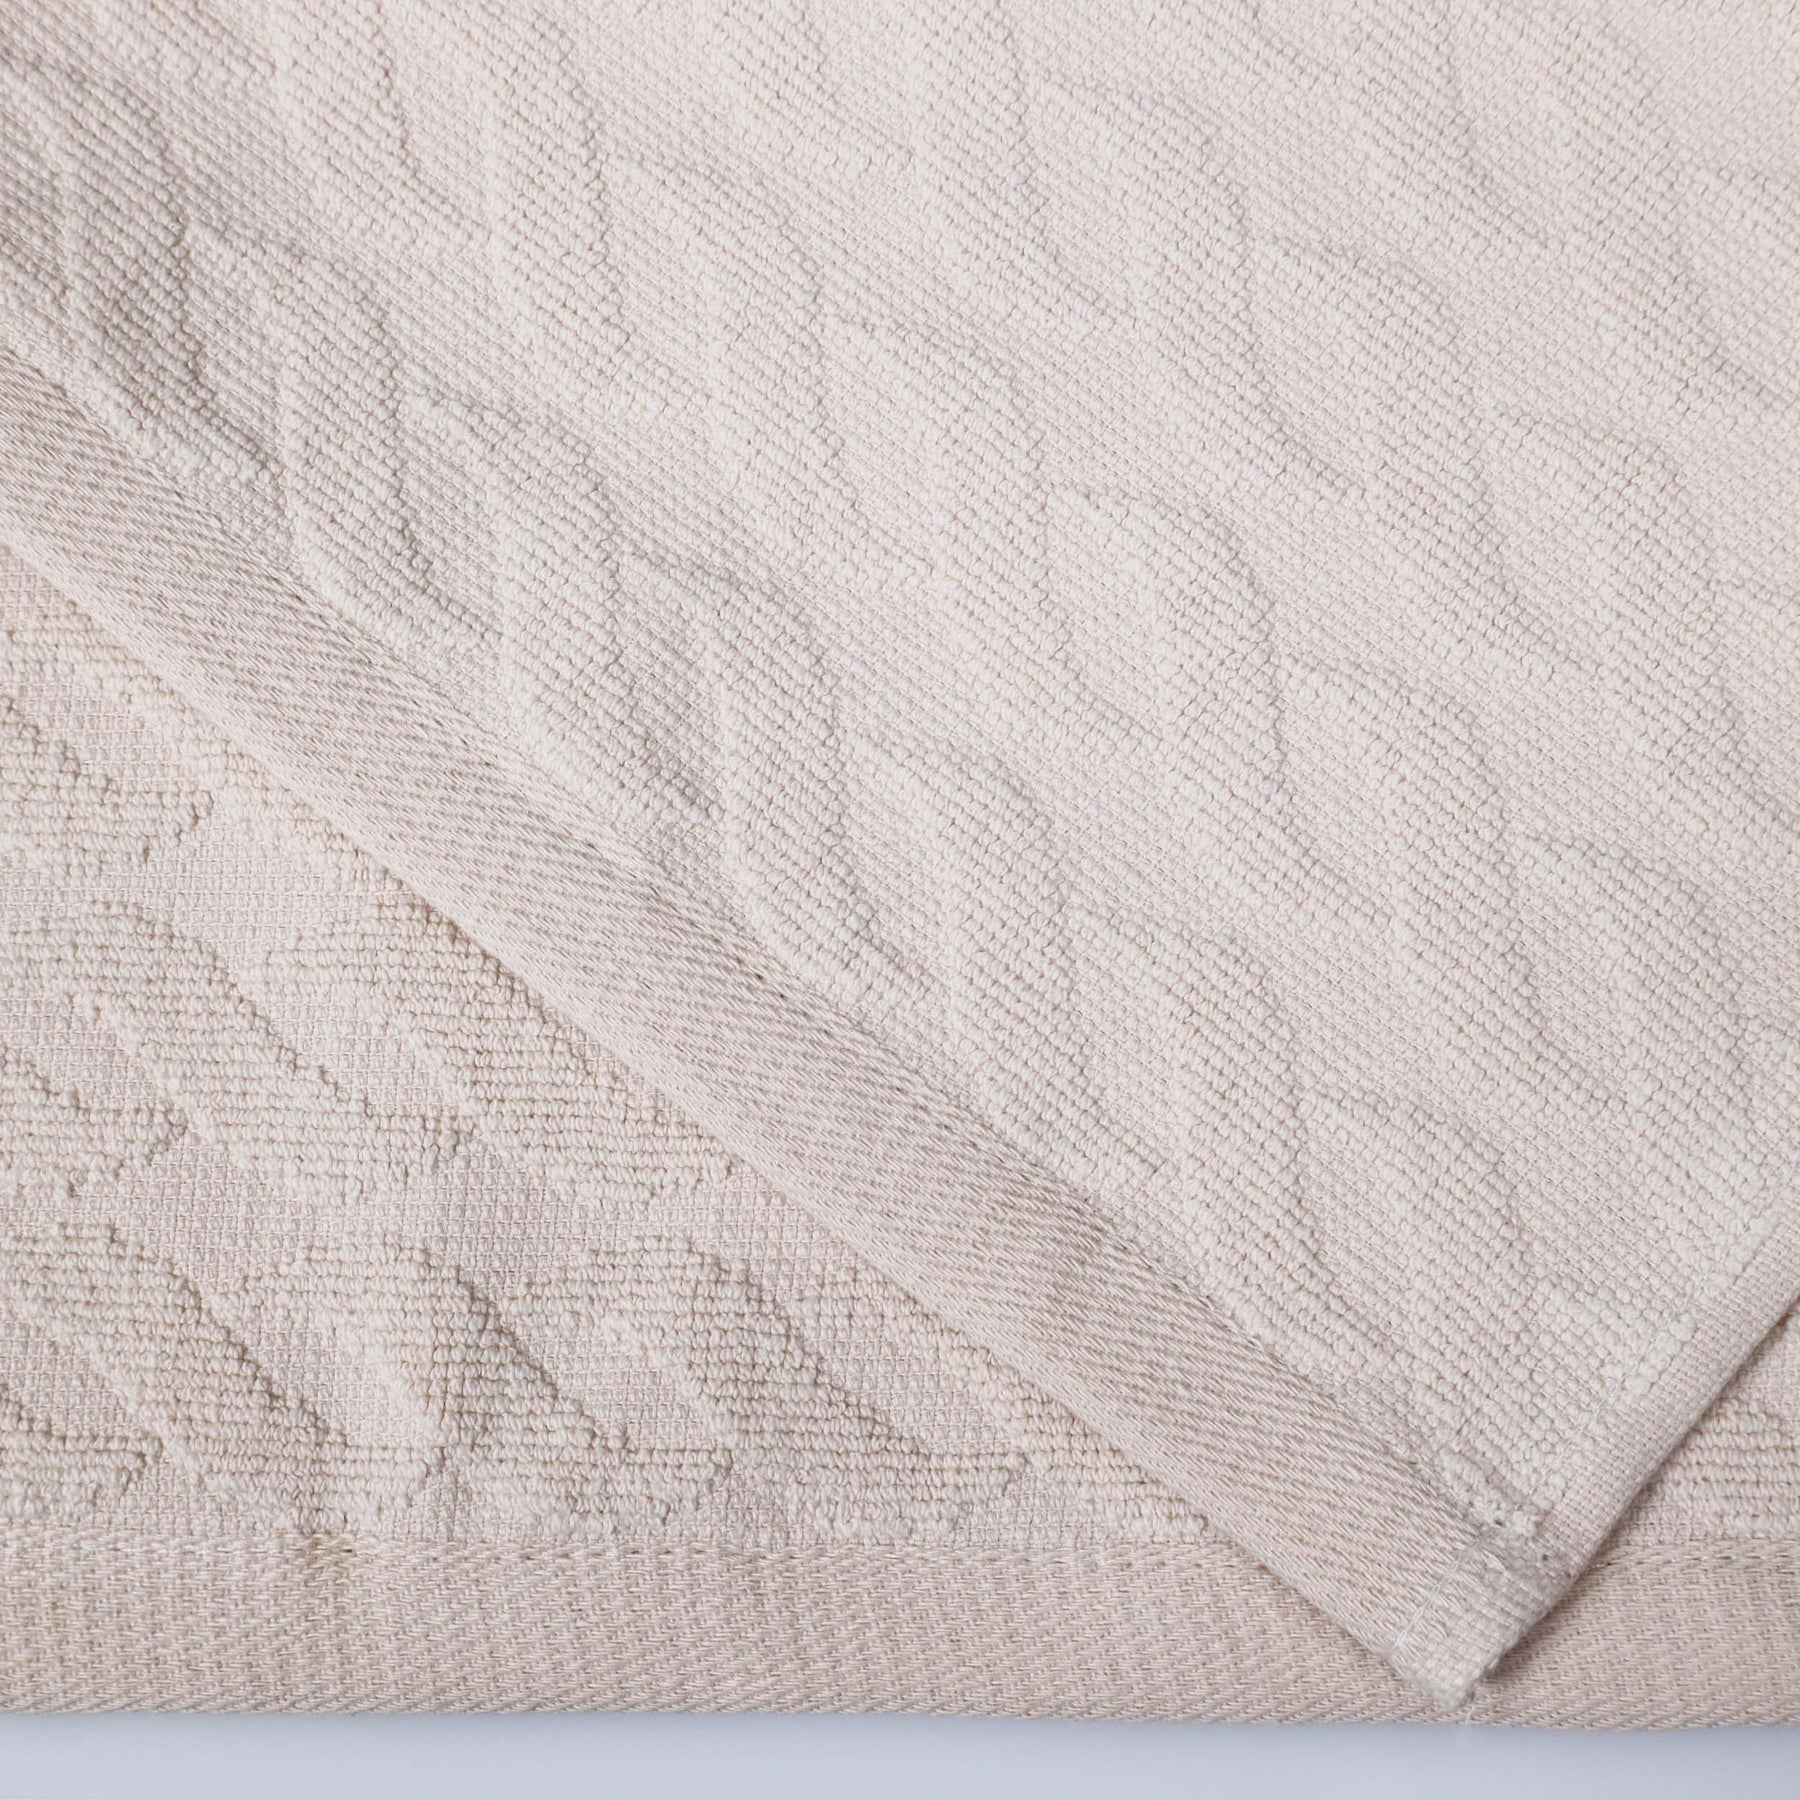 Premium Turkish Cotton Herringbone Jacquard Assorted 6-Piece Towel Set -  Ivory 